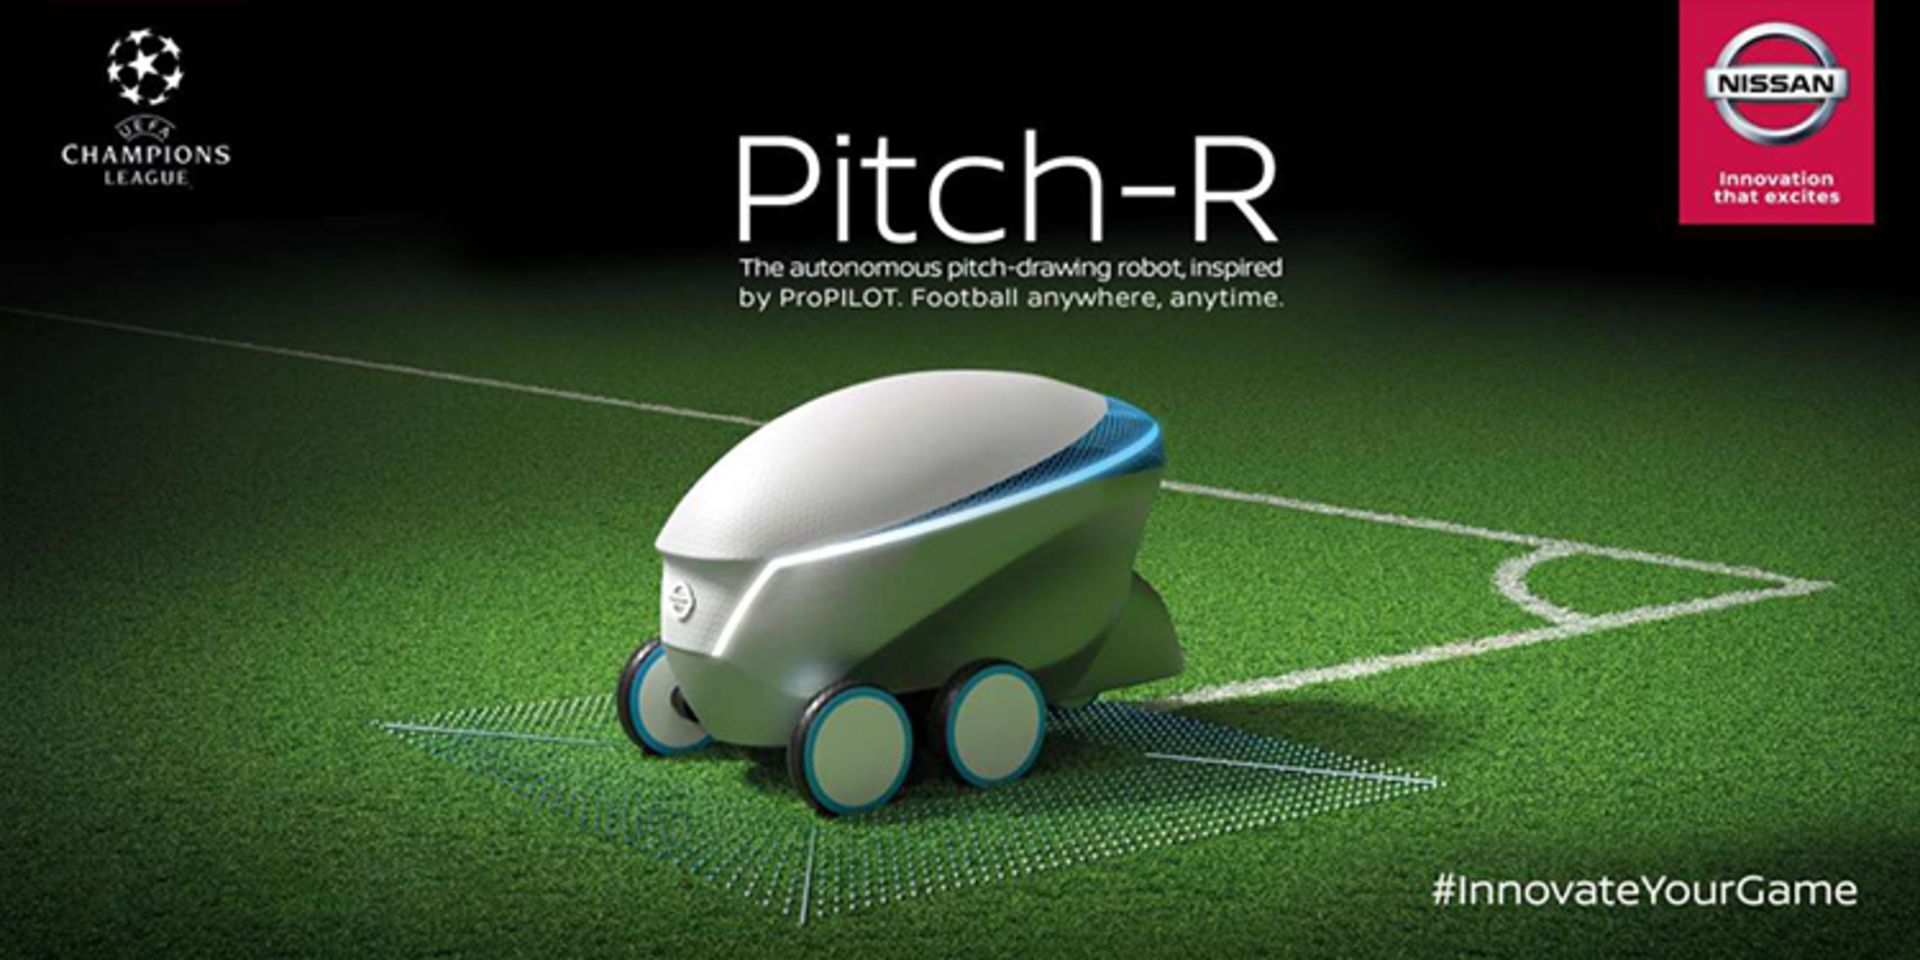 nissan robot pitch-r